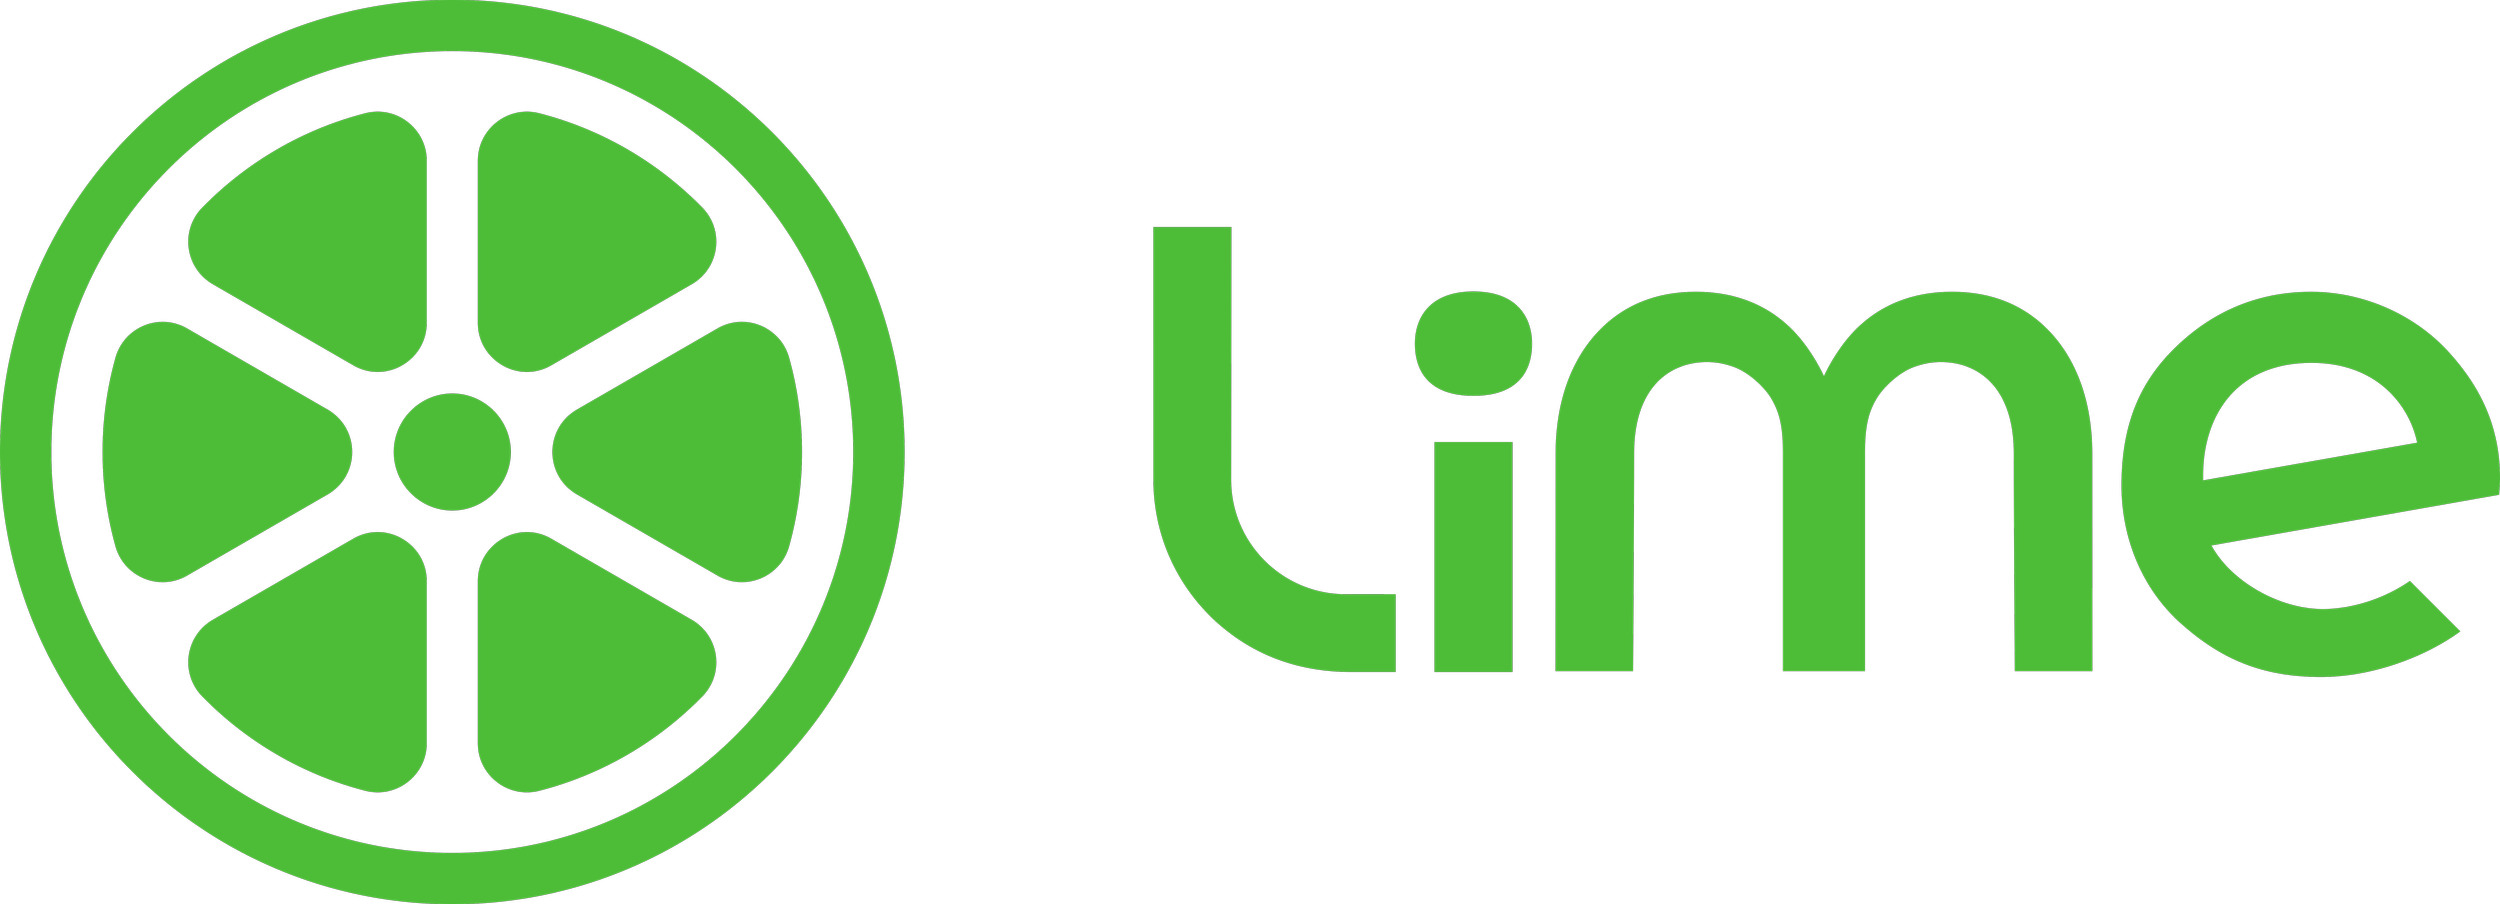 lime_logo_green_CMYK_horizontal.png